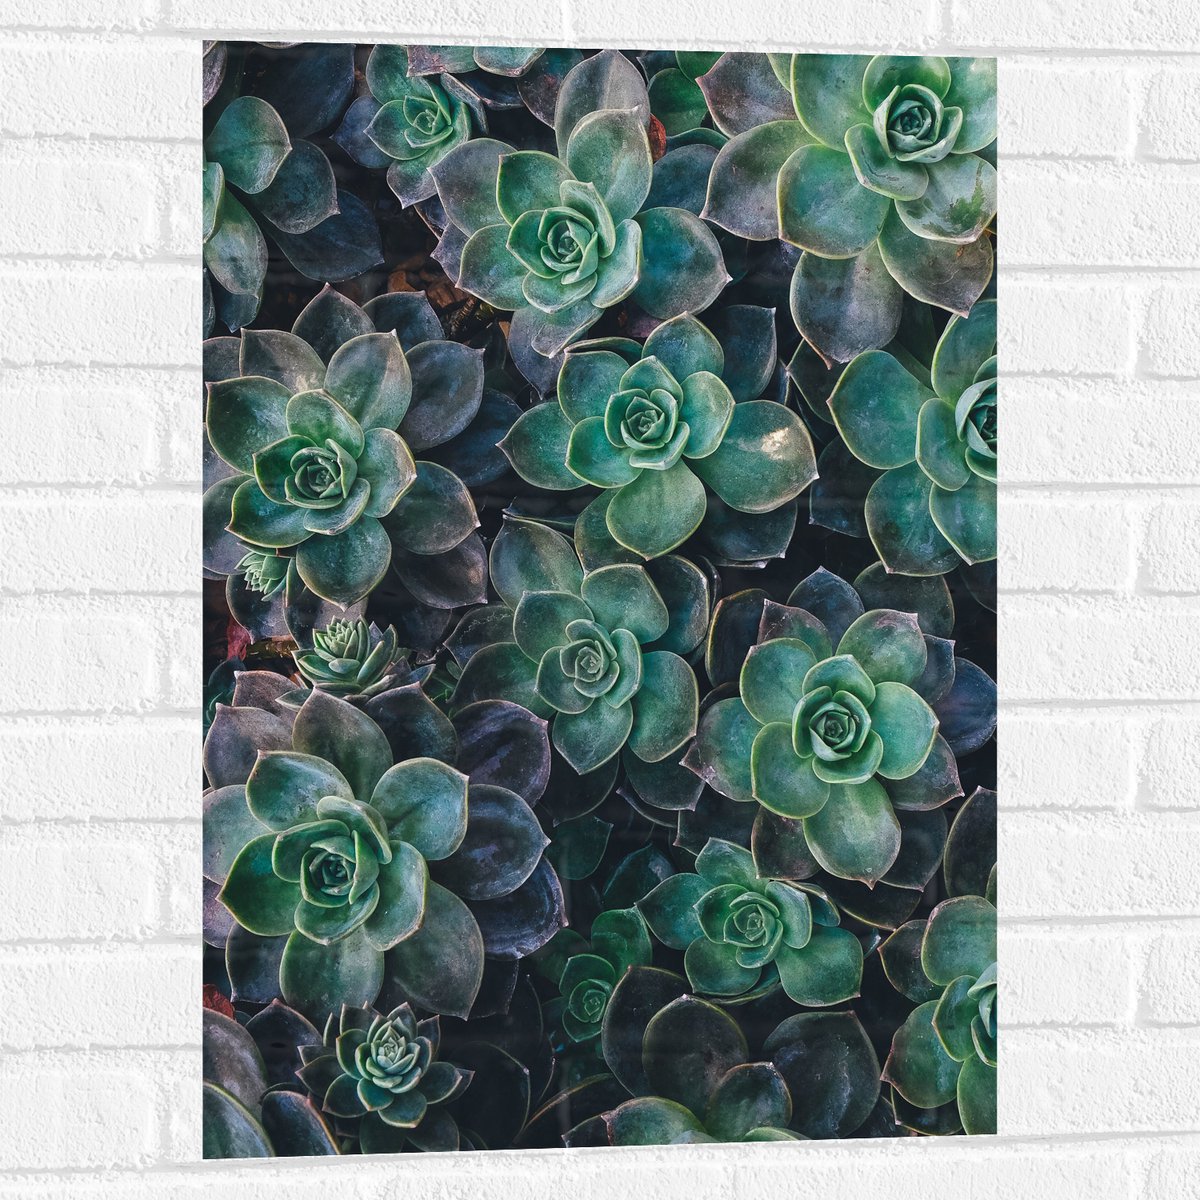 WallClassics - Muursticker - Echeveria Groene Plant - 50x75 cm Foto op Muursticker